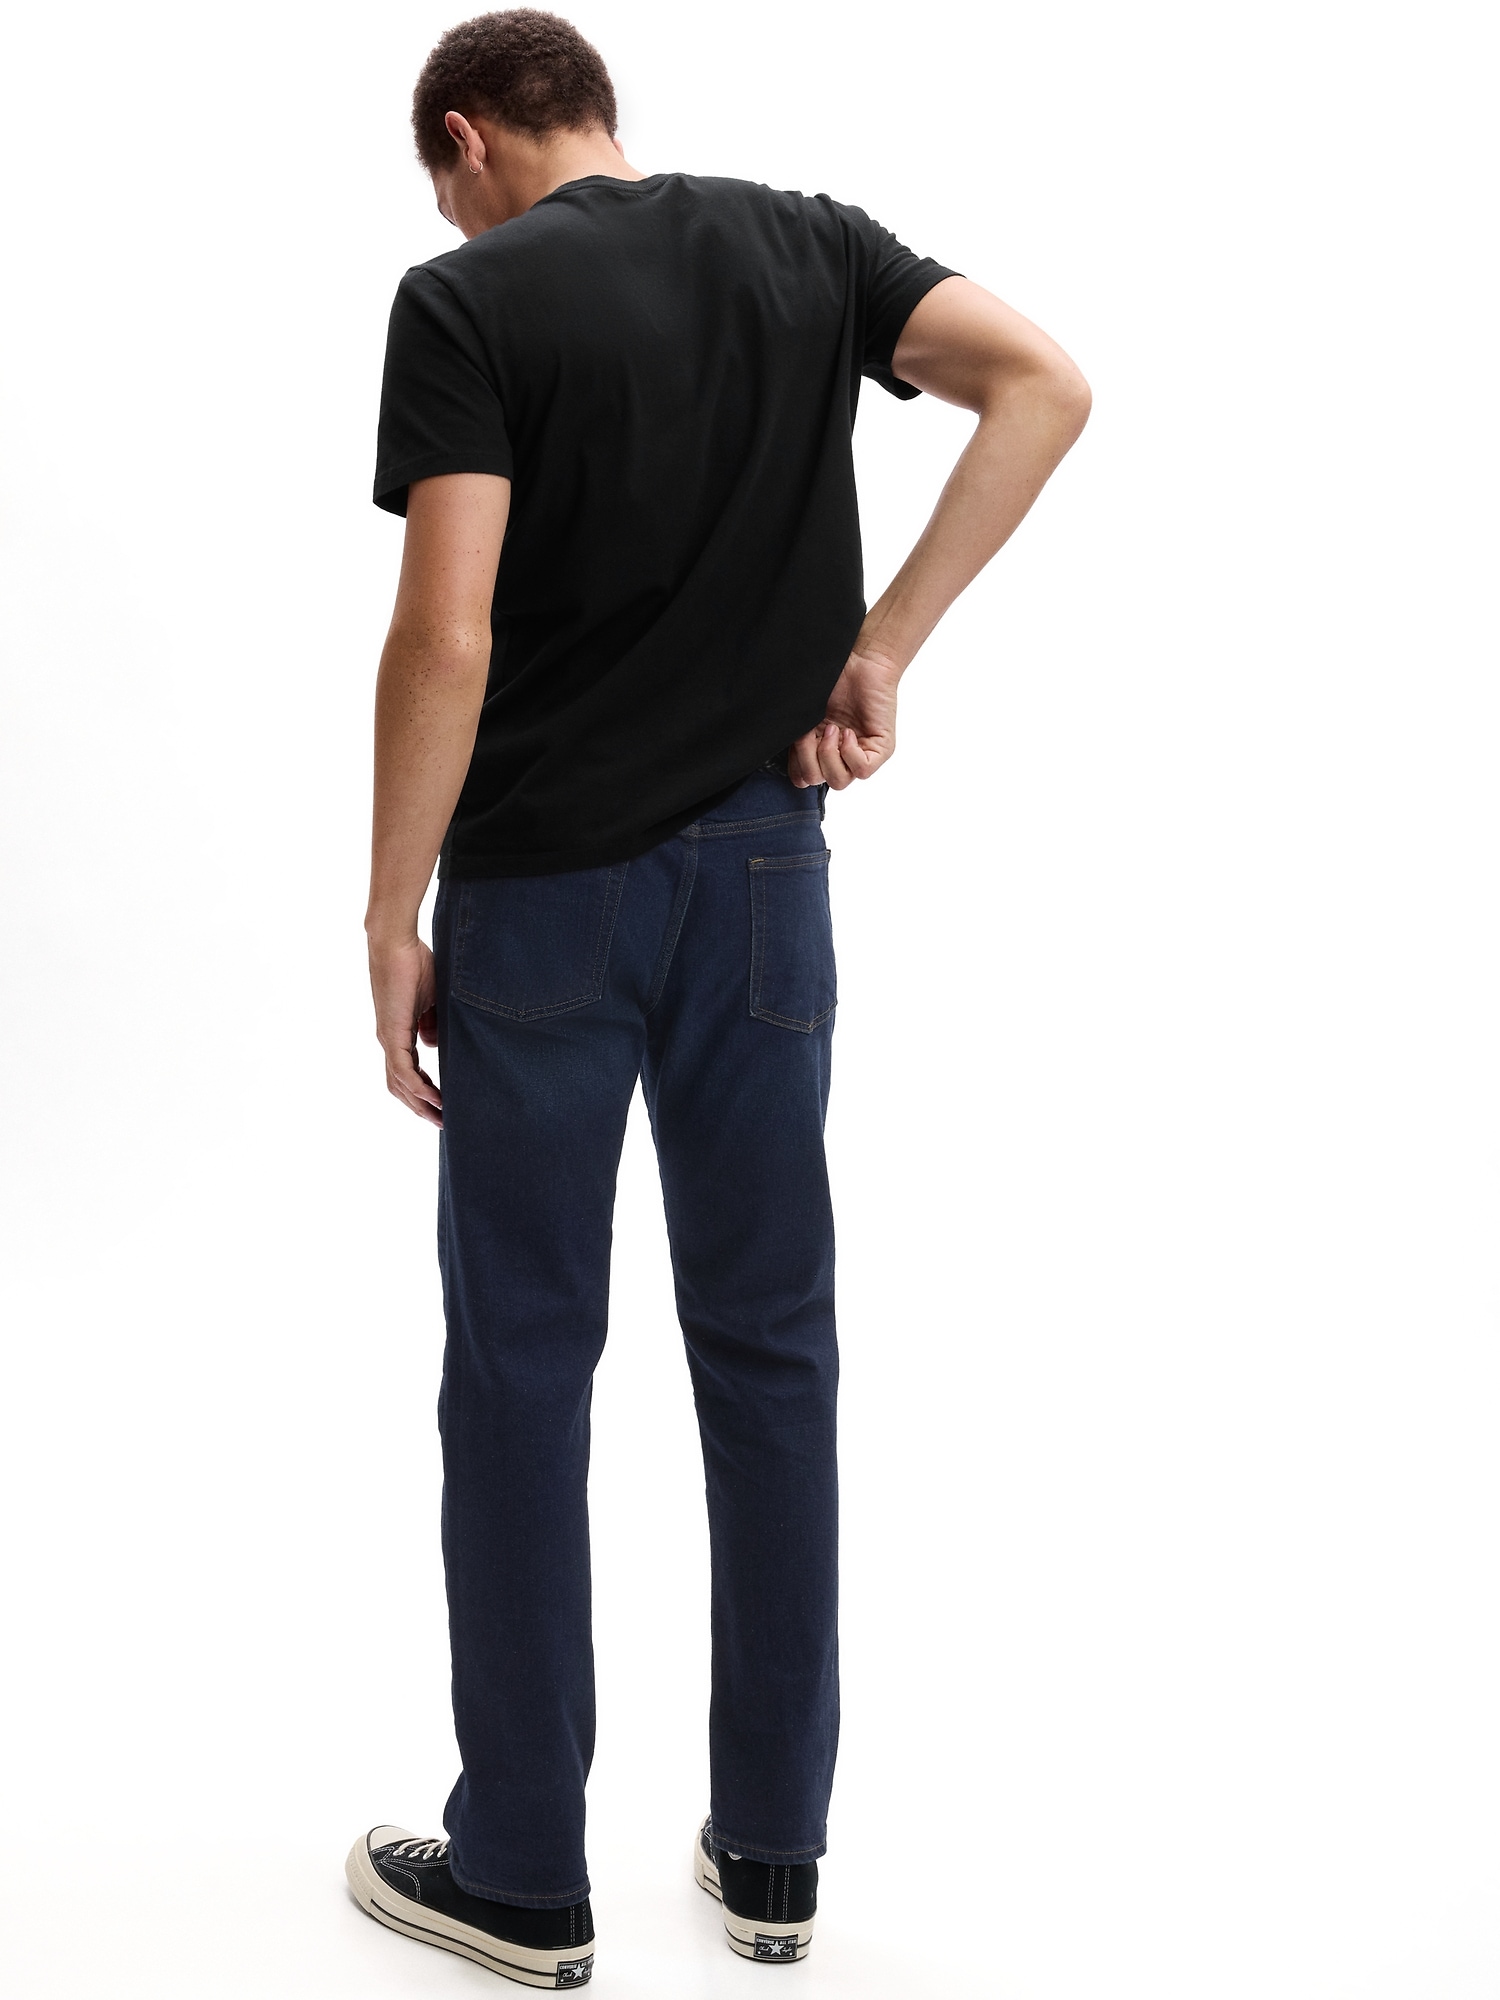 GAP Men's Relaxed Fit Jeans, Authentic Medium, 31W x 32L 